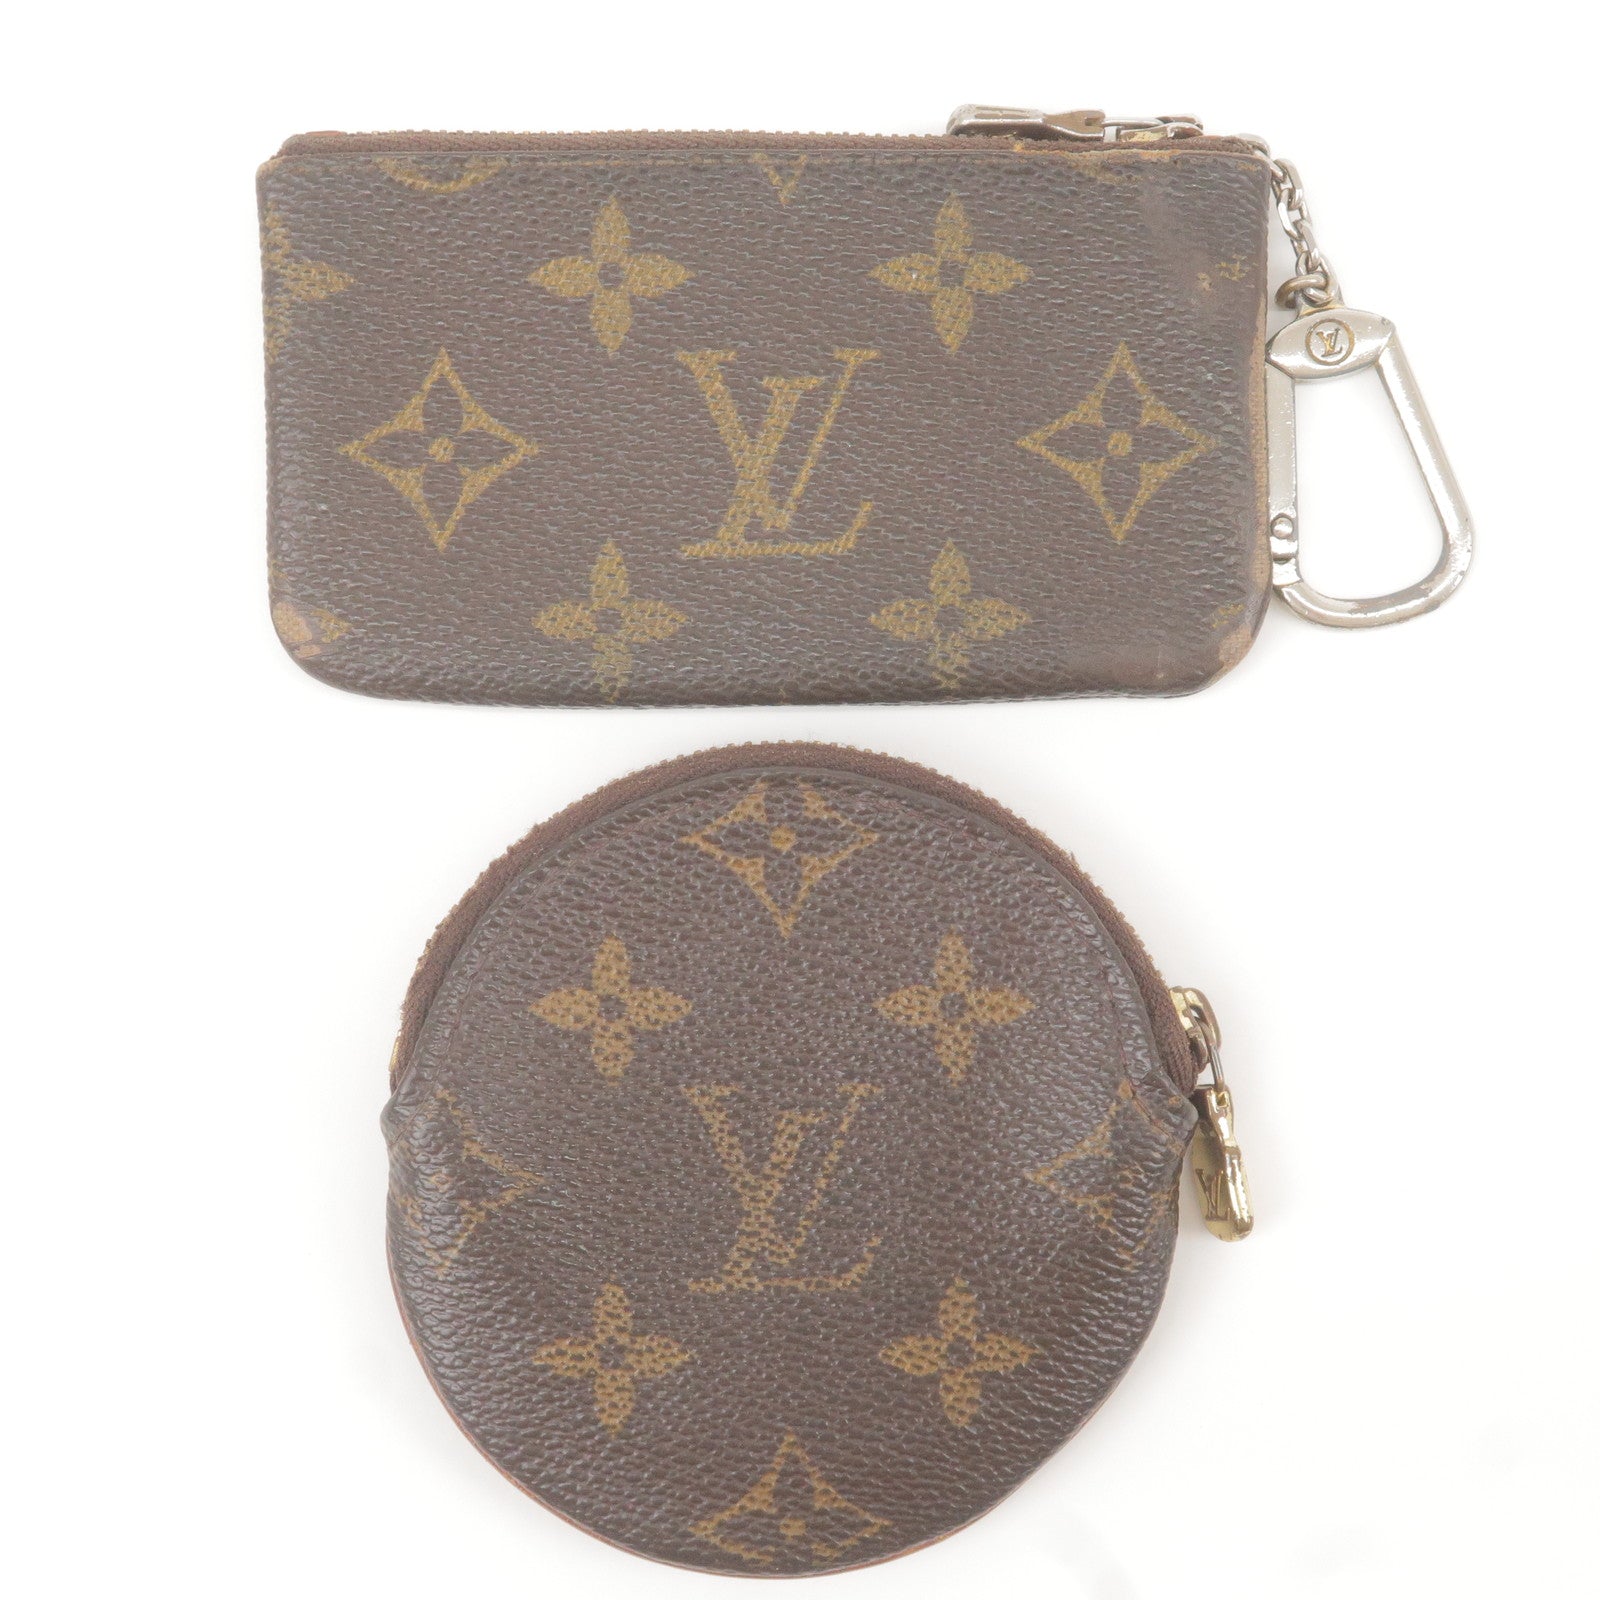 Am I the only one who prefers Celine Monogram to LV one? : r/handbags